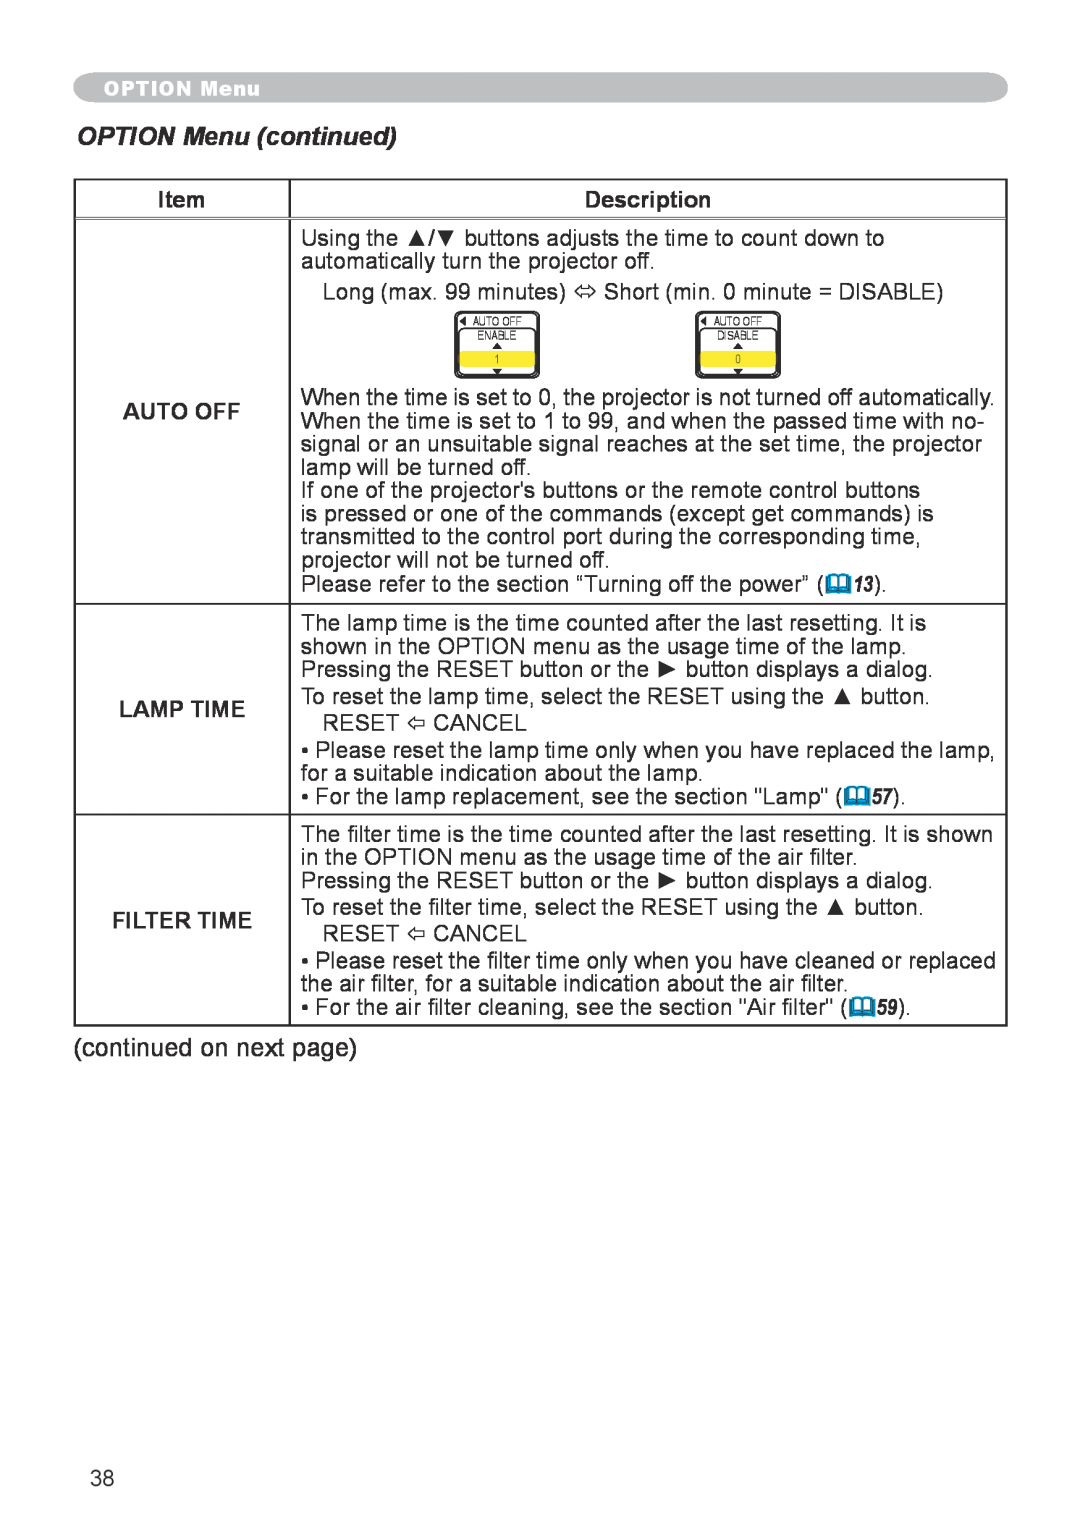 3M X20 manual OPTION Menu continued, Description, Auto Off, Lamp Time, Filter Time 